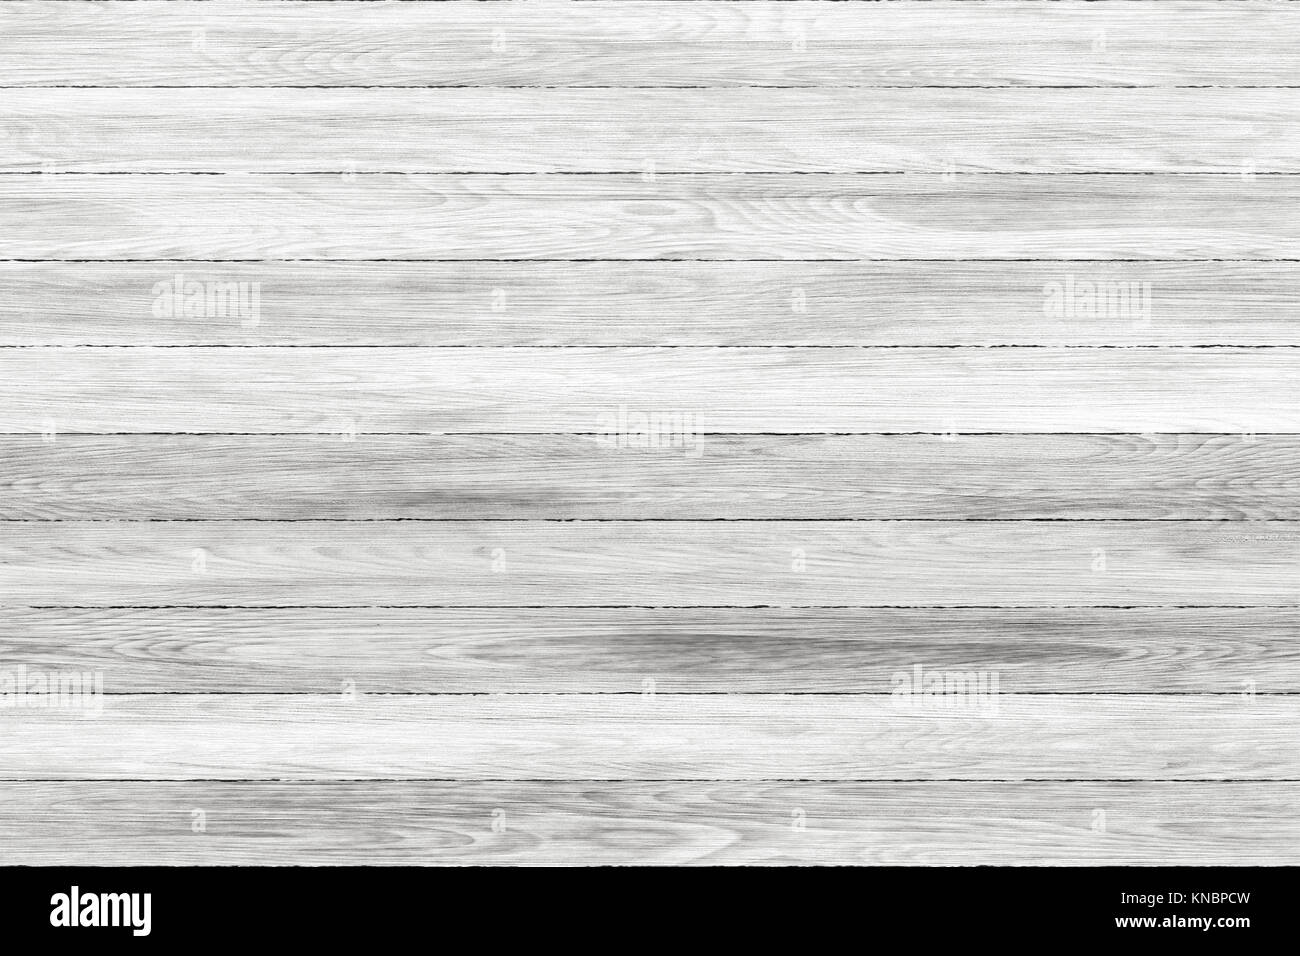 White washed grunge wood panels. Planks Background. Old washed wall wooden vintage floor Stock Photo